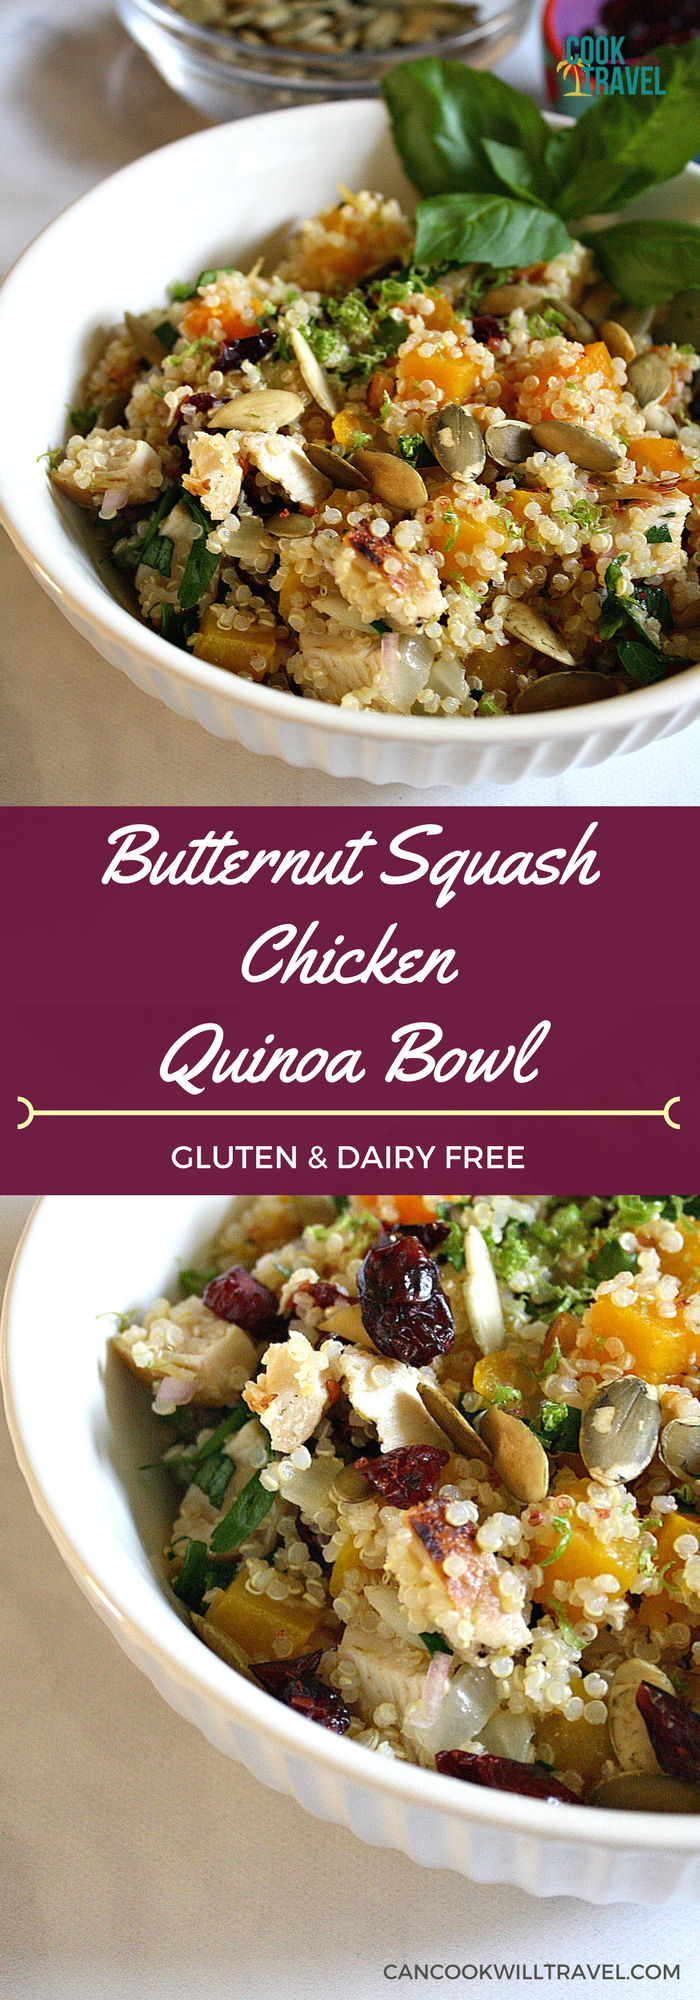 Butternut Squash Chicken Quinoa Bowl_Collage1